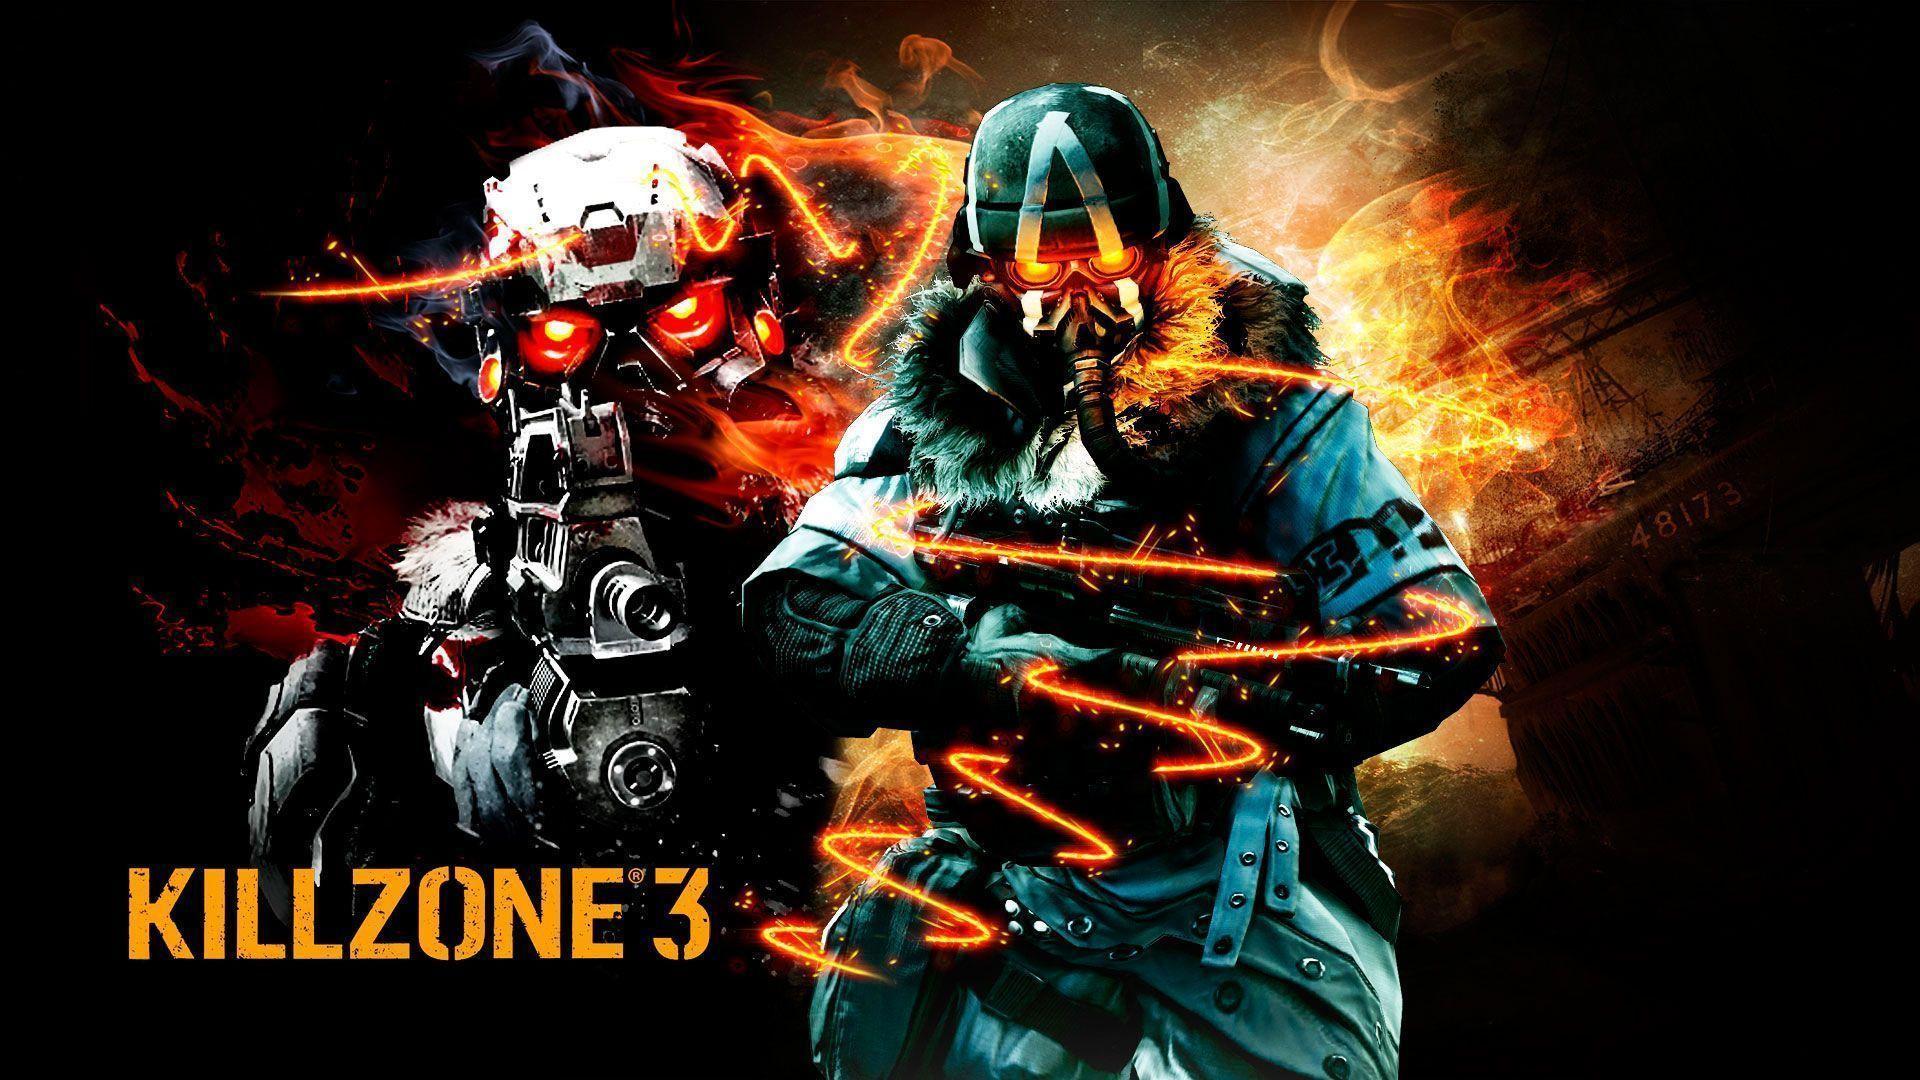 killzone 3 game wallpaper download. walljpeg